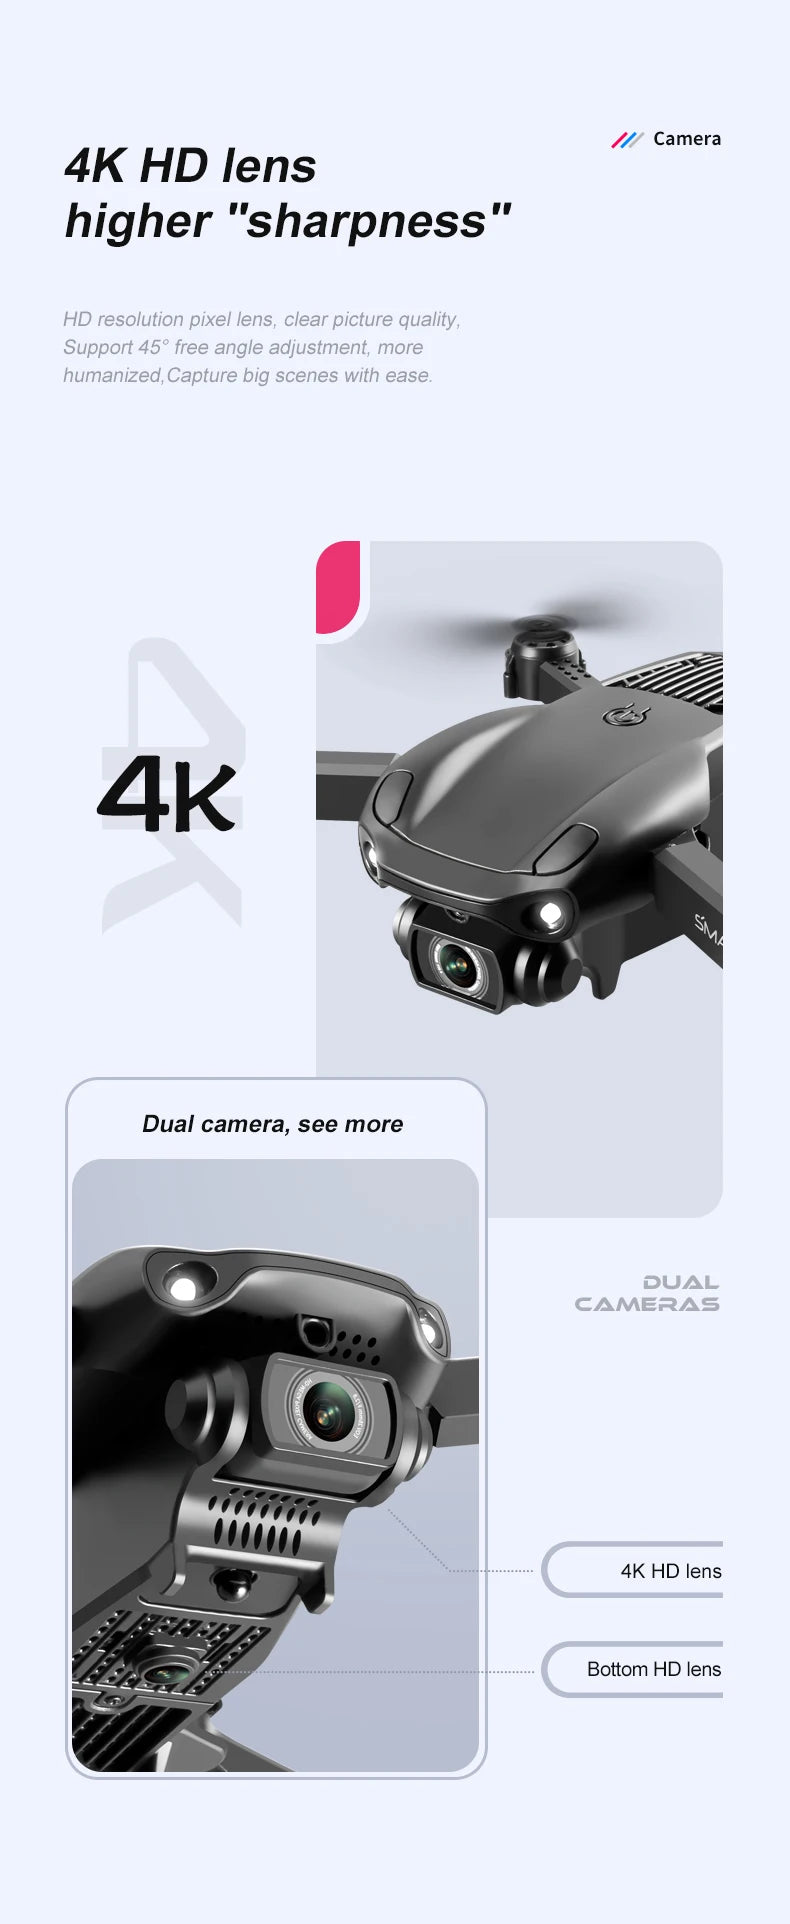 4DRC V22 Drone, camera 4k hd lens higher "sharpness'